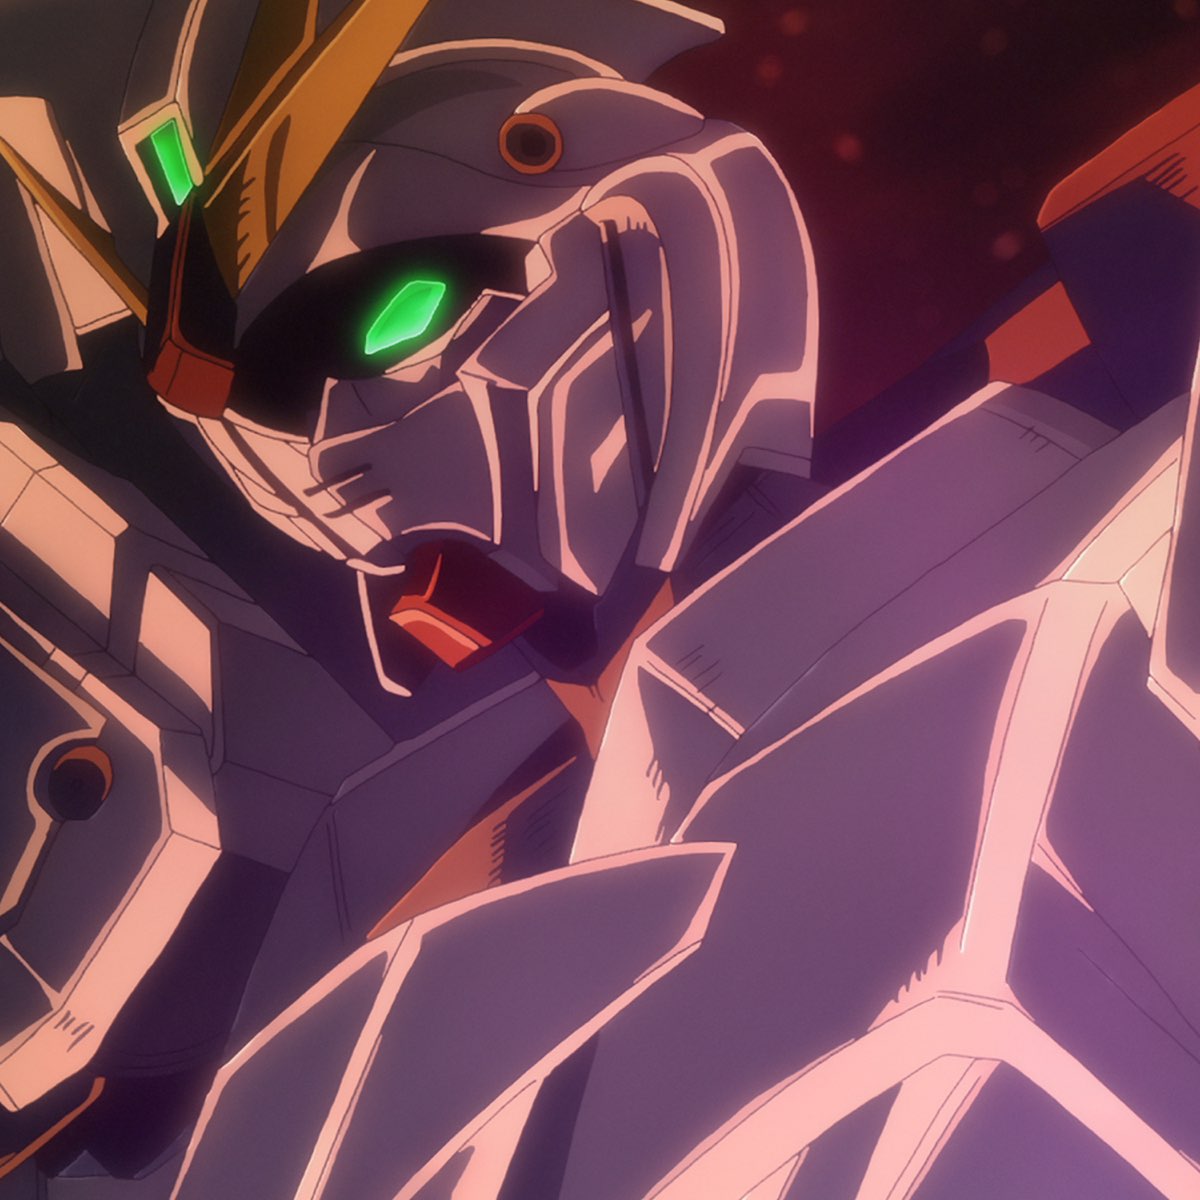 Mobile Suit Gundam Nt Narrative Original Motion Picture Soundtrack By Hiroyuki Sawano On Apple Music